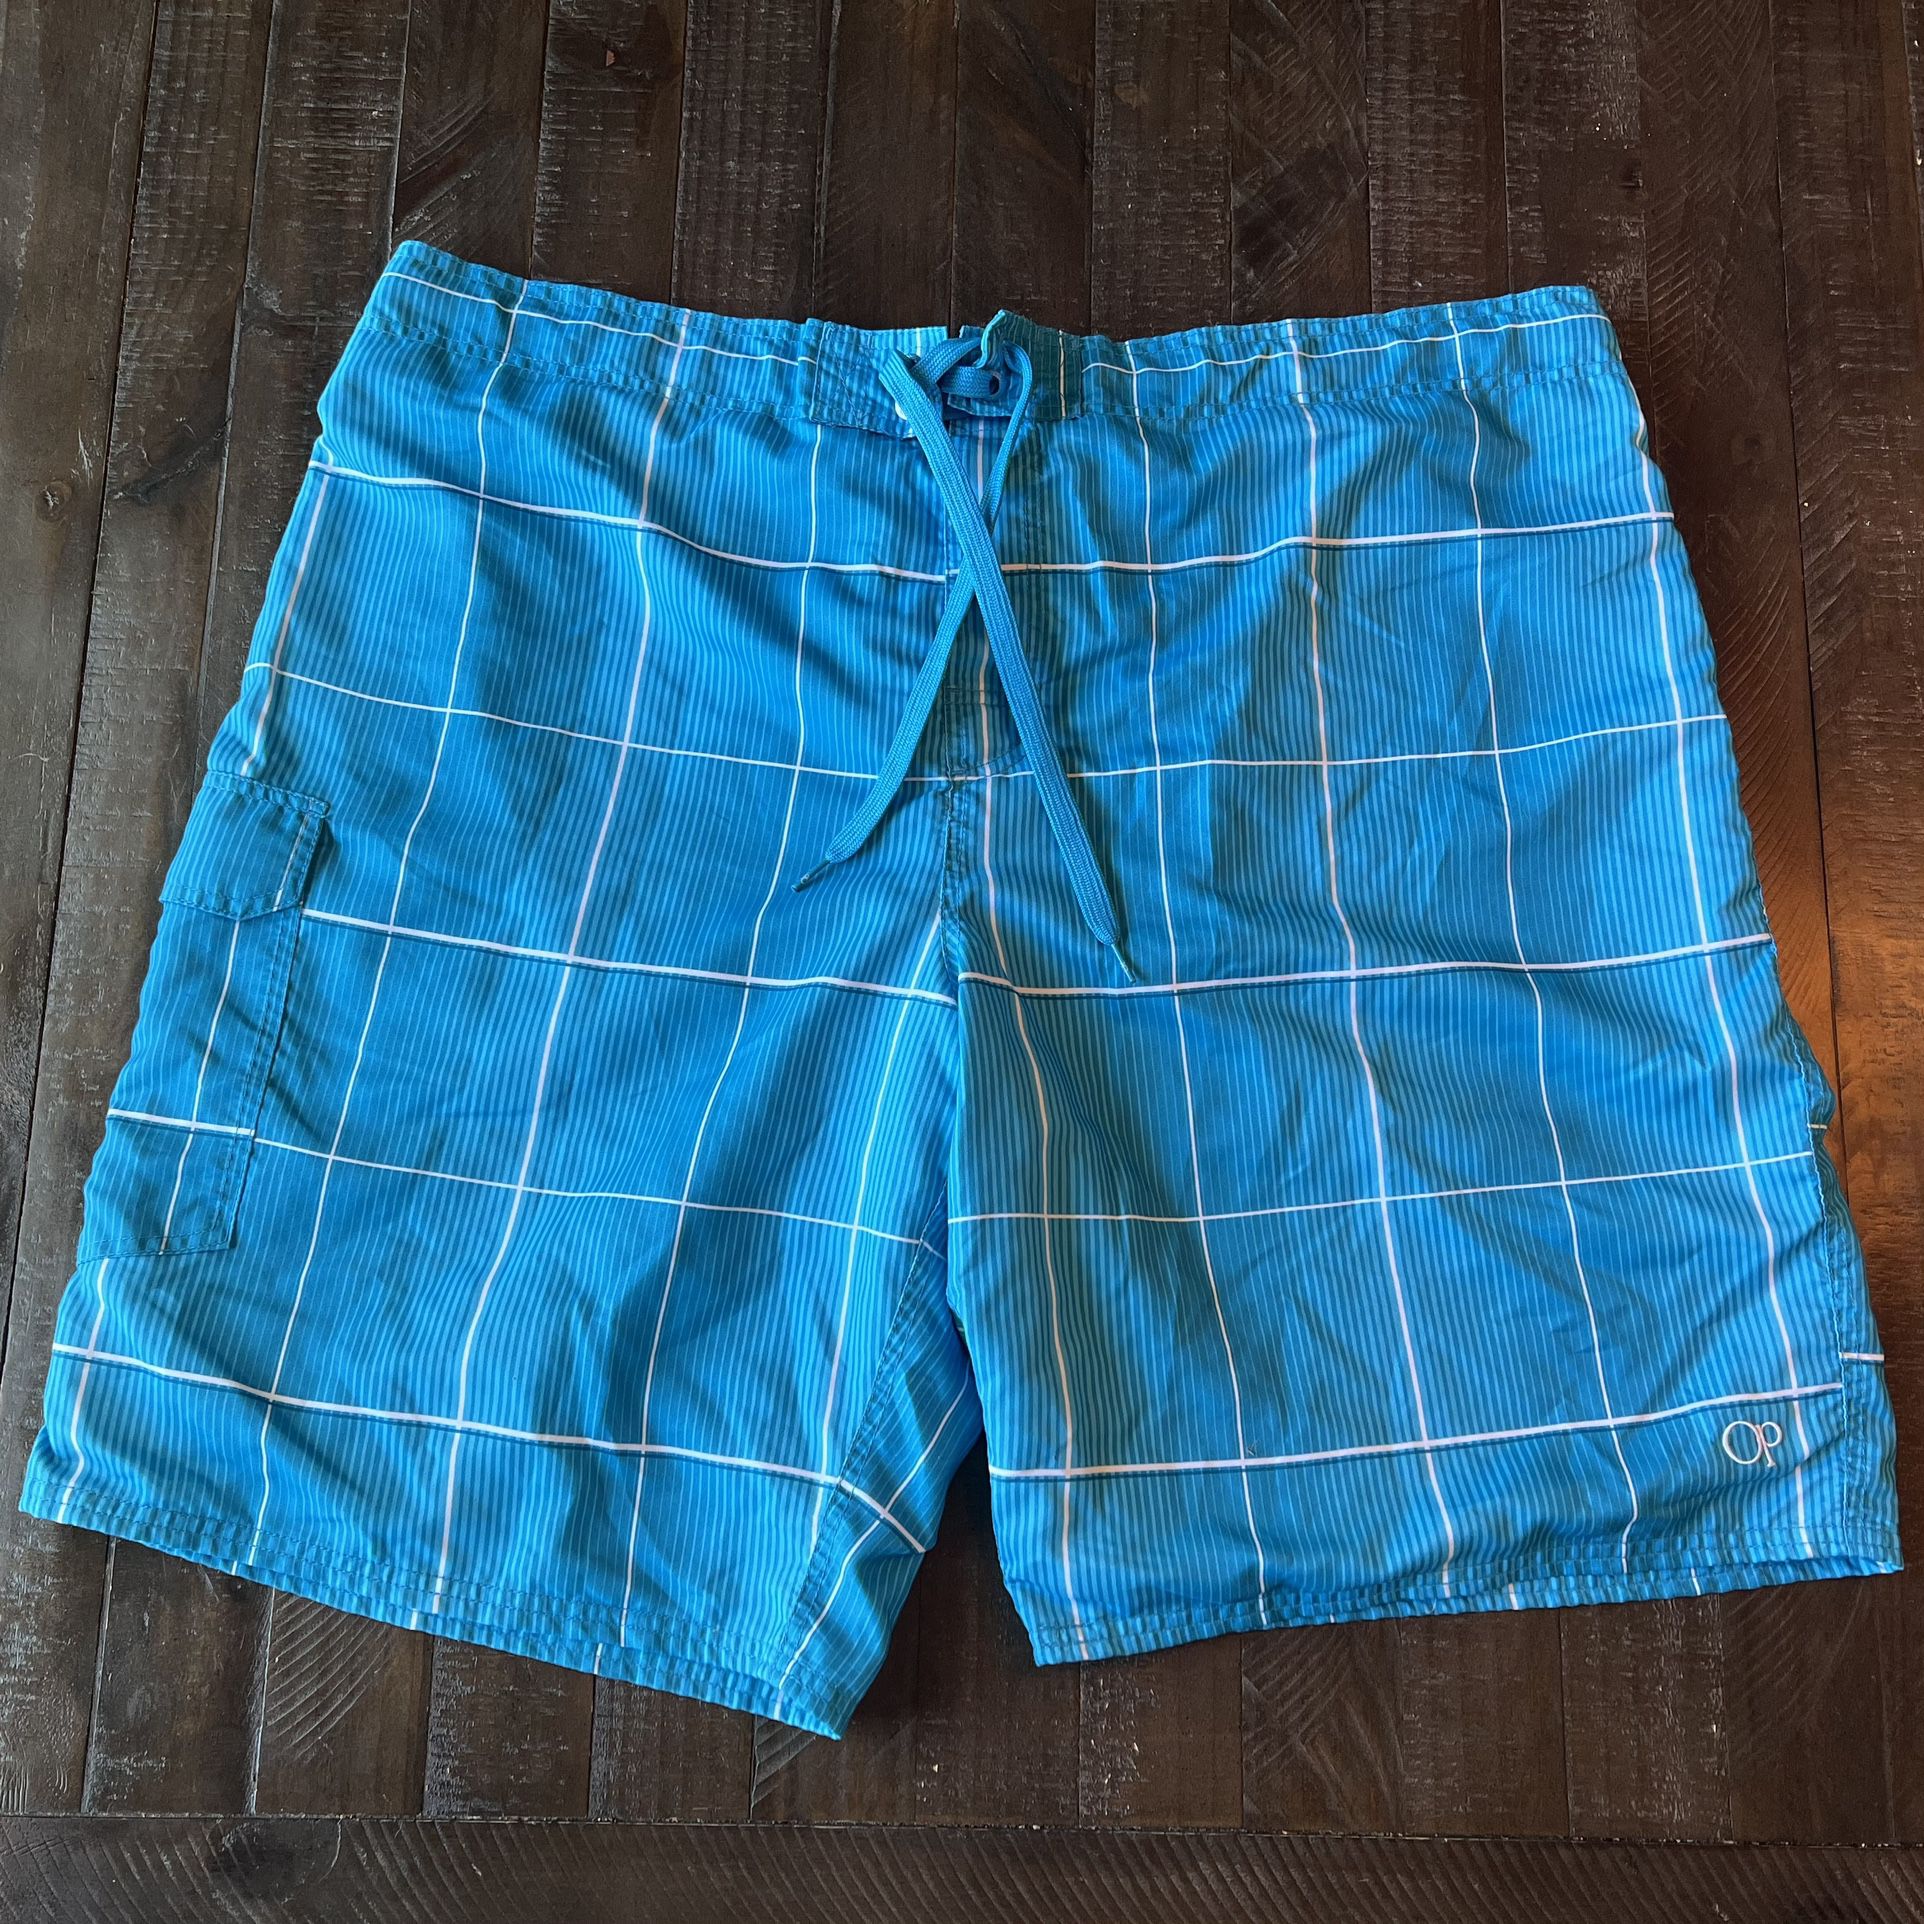 OP Ocean Pacific Men’s Shorts Swim Trunks Mesh Lined 3XL Blue 48-50.